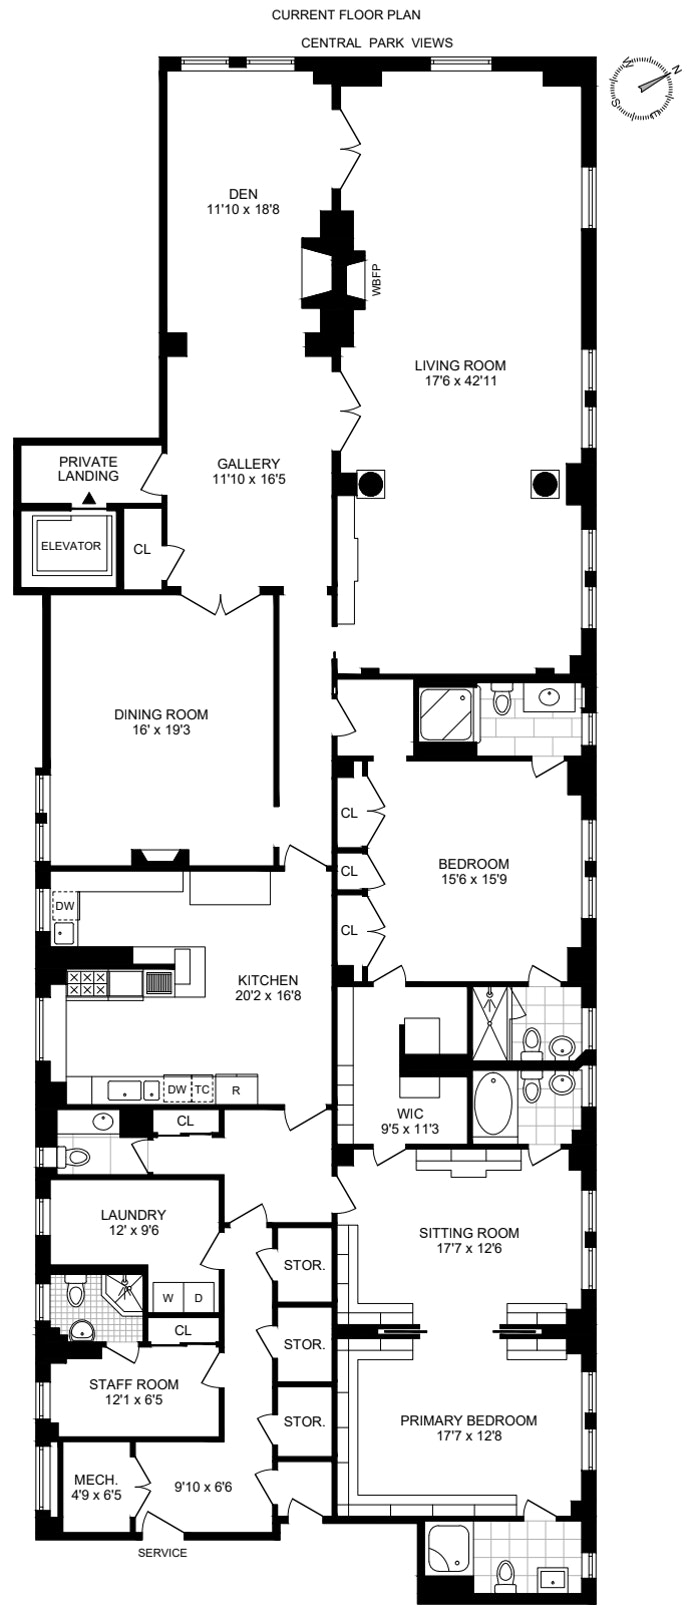 Floorplan for 1035 Fifth Avenue, 4C